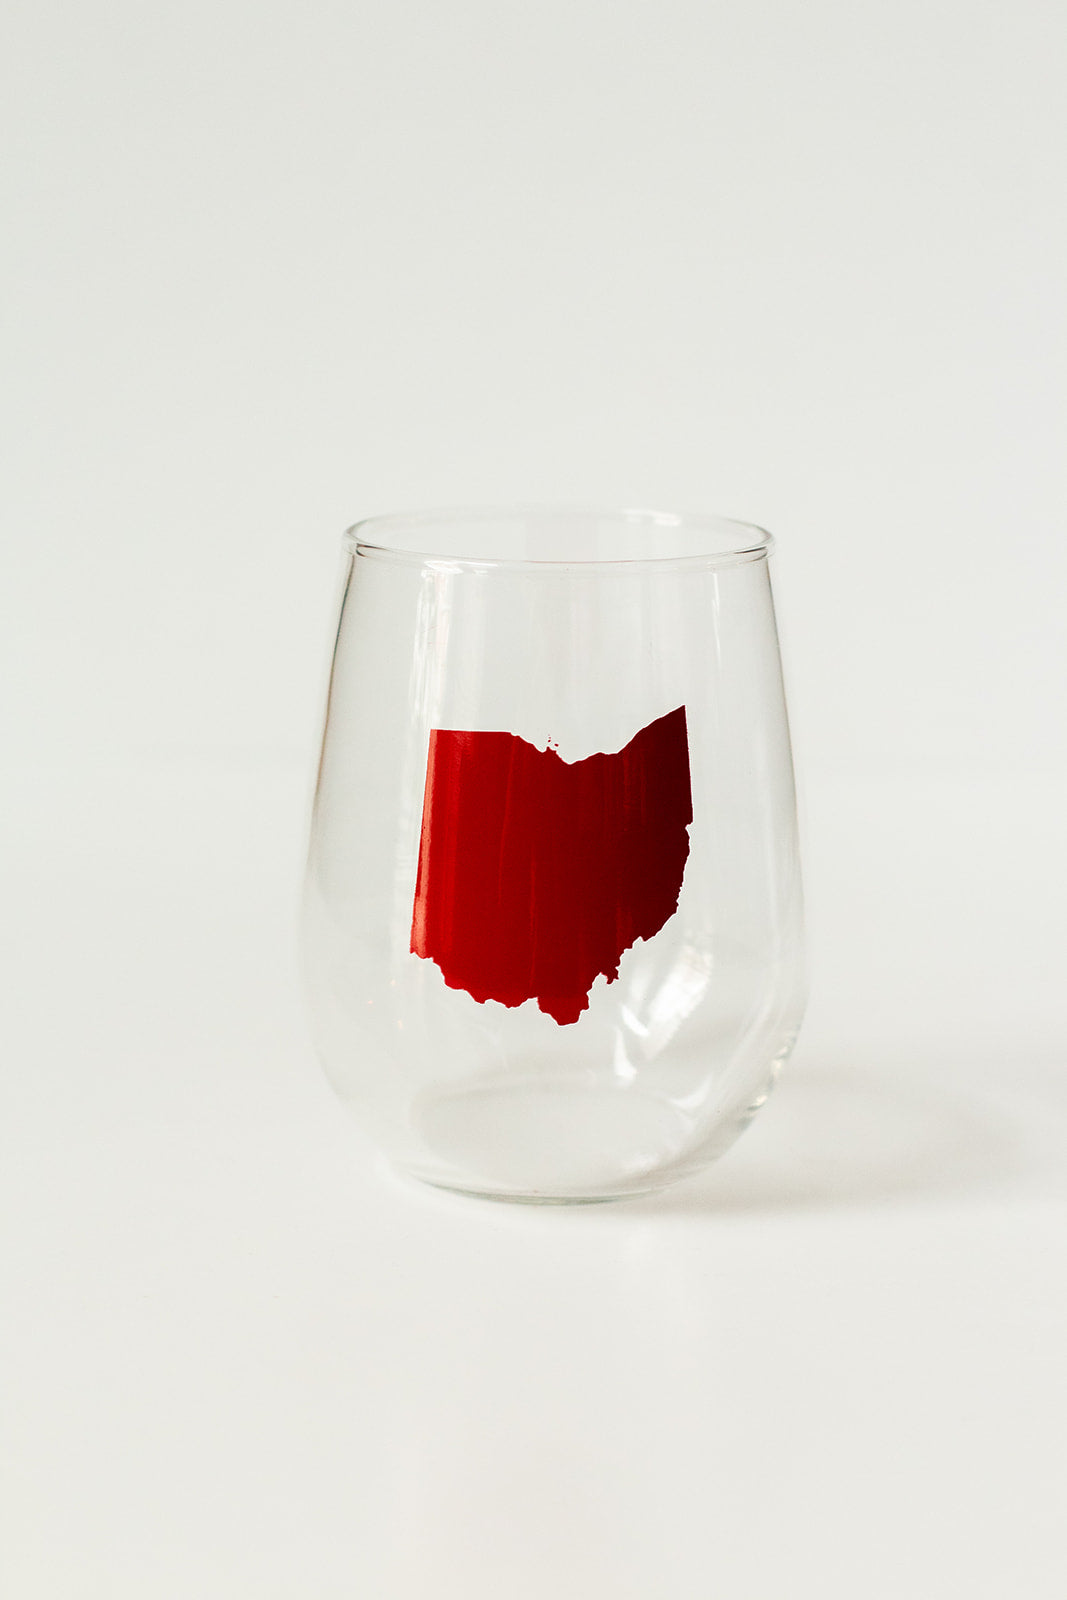 Ohio (OH) Wine Glass